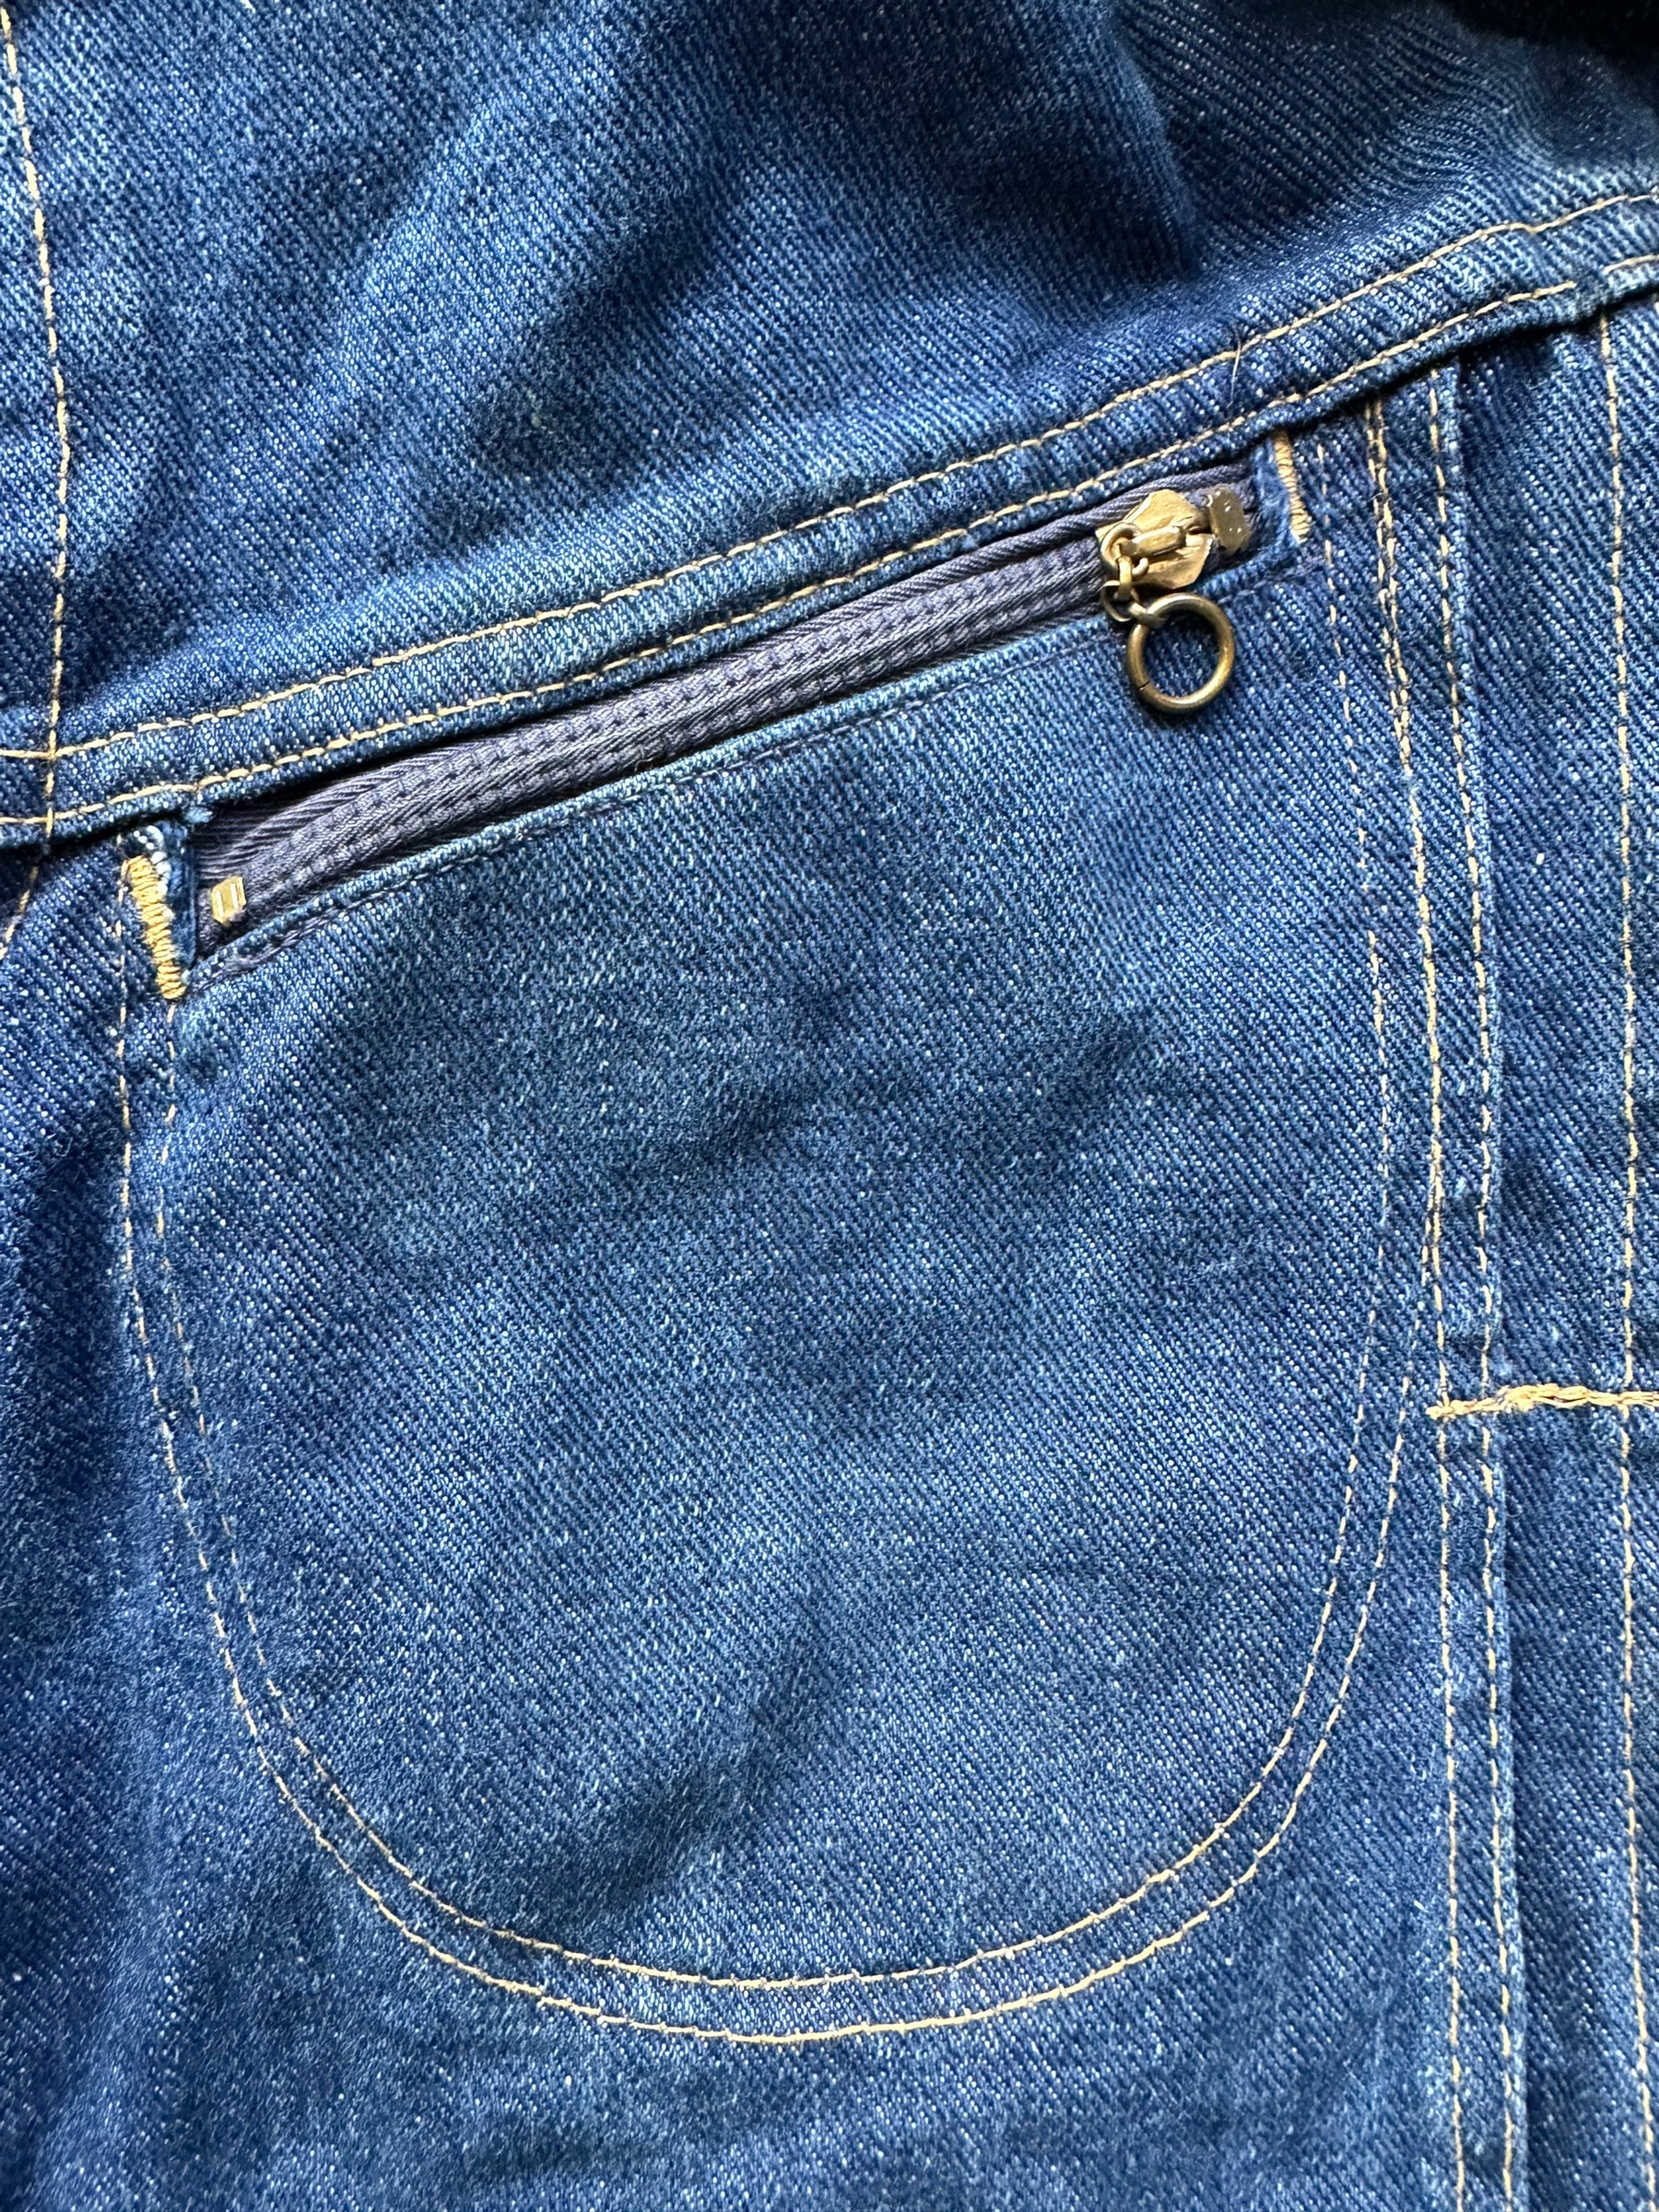 Right Slant Pocket on Vintage Roebucks Selvedge Denim Jacket SZ S | Vintage Jean Jacket Seattle | Seattle Vintage Denim